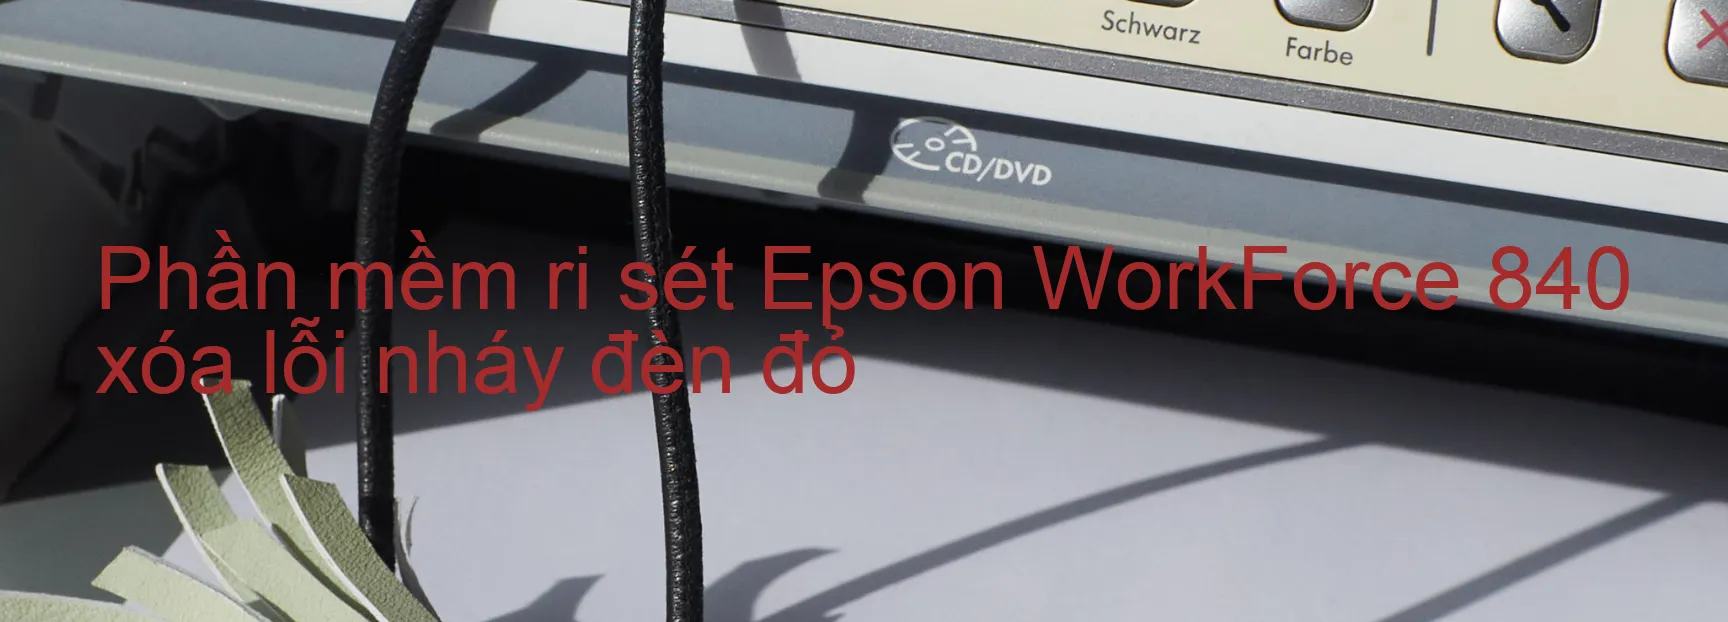 Phần mềm reset Epson WorkForce 840 xóa lỗi nháy đèn đỏ